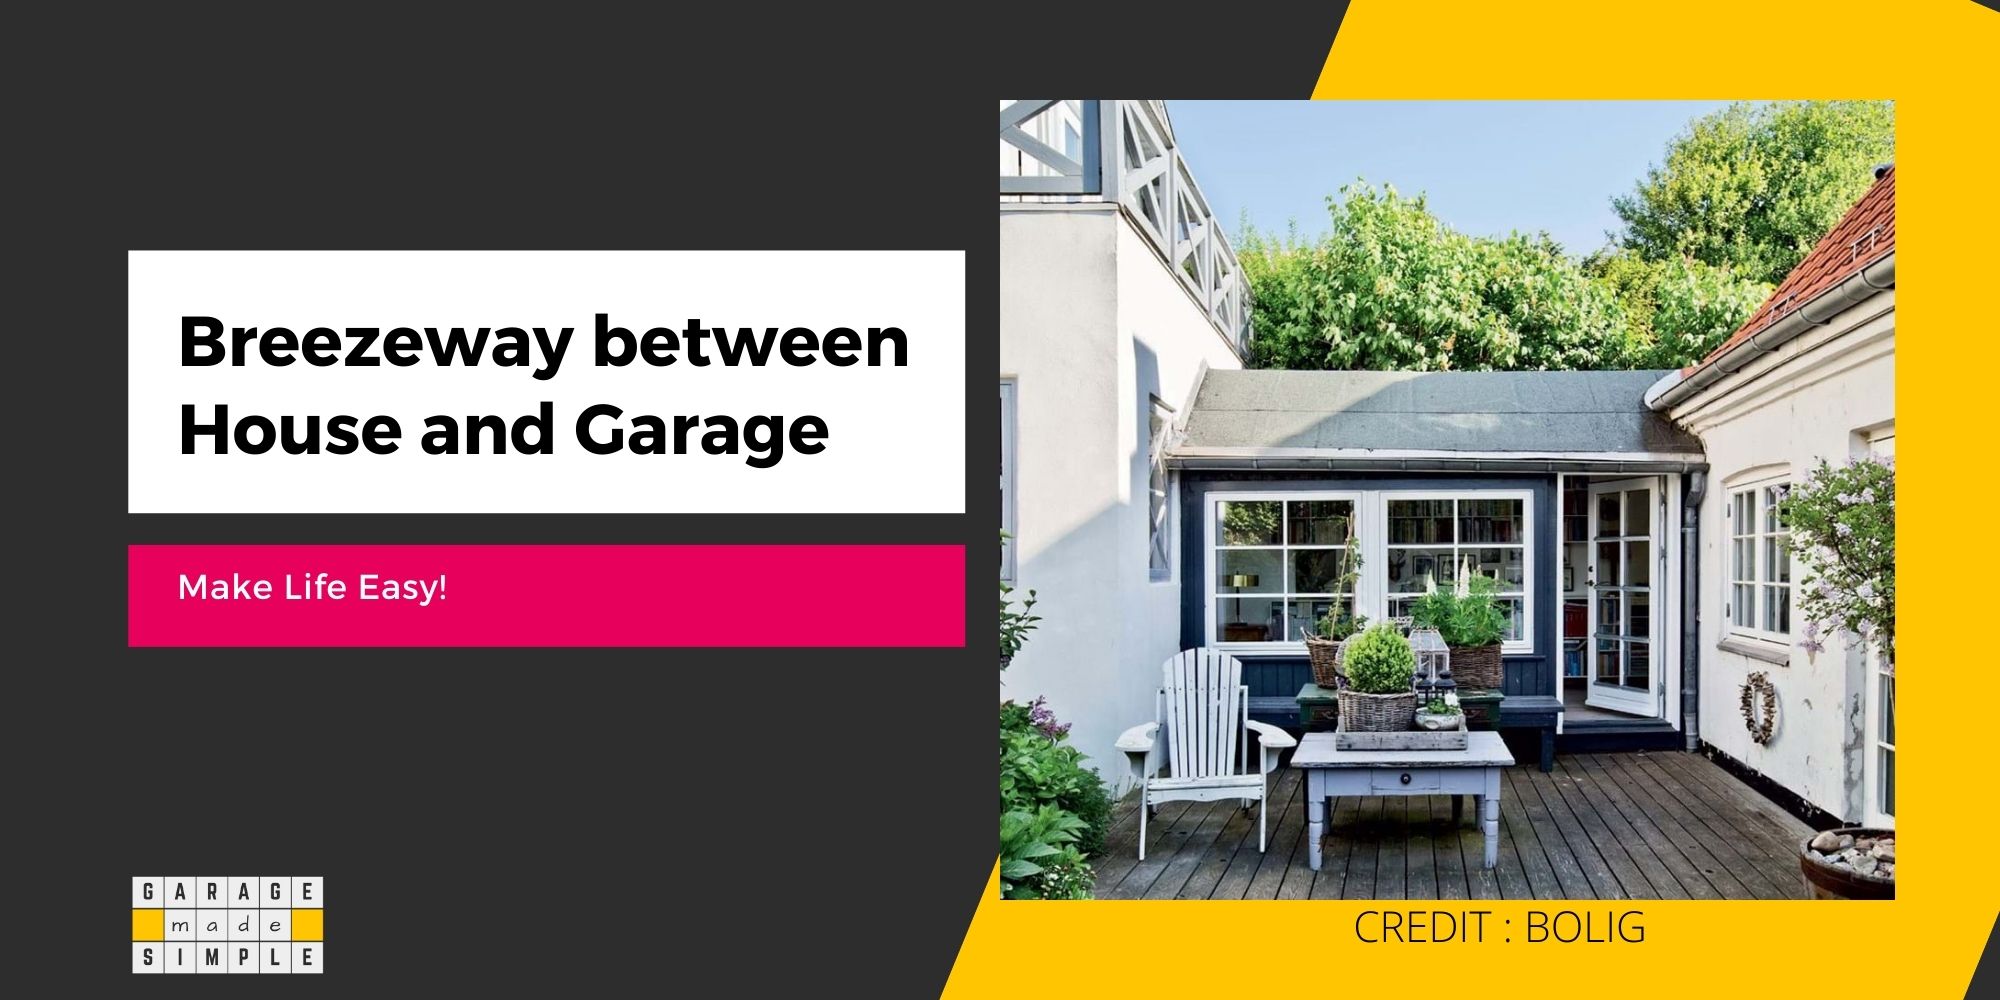 6 Amazing Benefits of Breezeway Between House And Garage